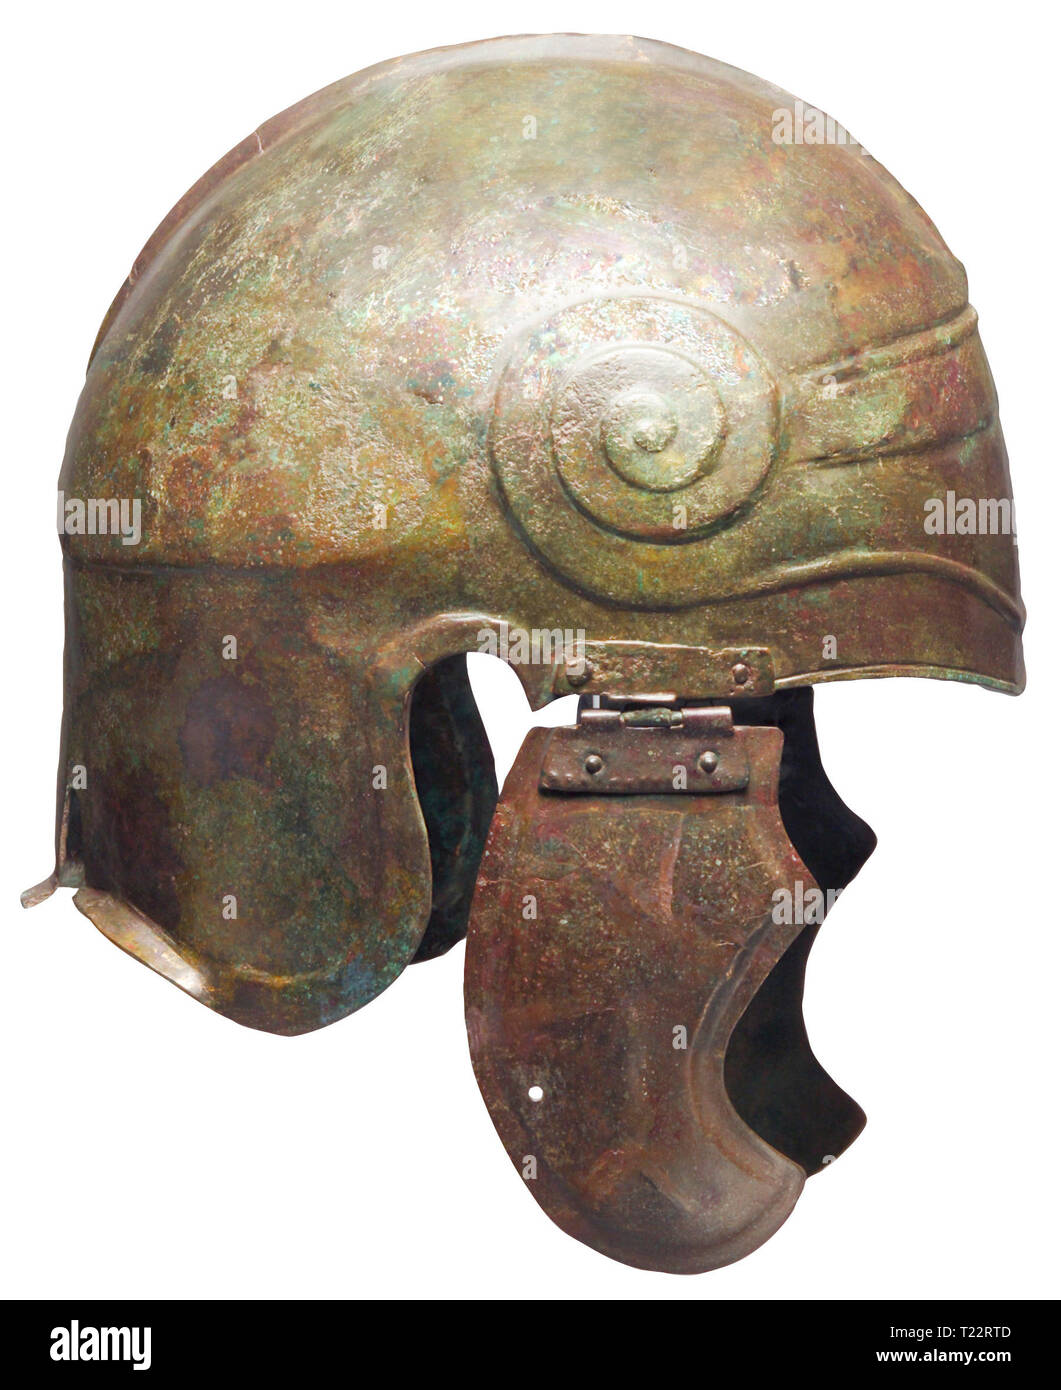 Pare-balles, casques, casque, Chalcidian bronze, Grec, 5e / 4e siècle avant J.-C.,-Additional-Rights Clearance-Info-Not-Available Banque D'Images